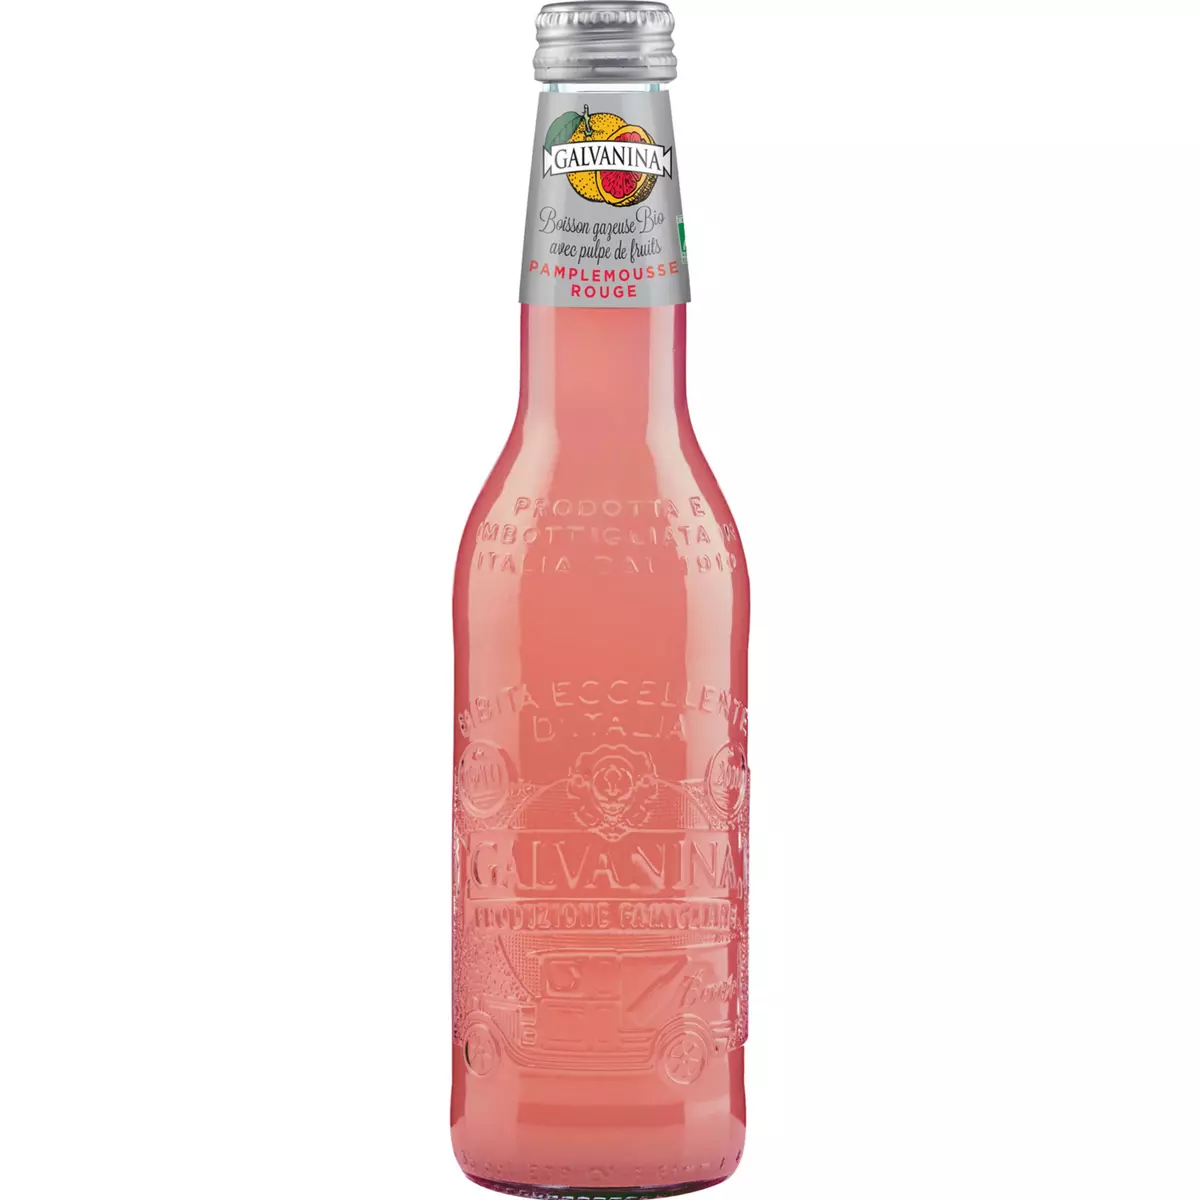 GALVANINA Galvanina boisson gazeuse bio au pamplemousse rouge 35,5cl